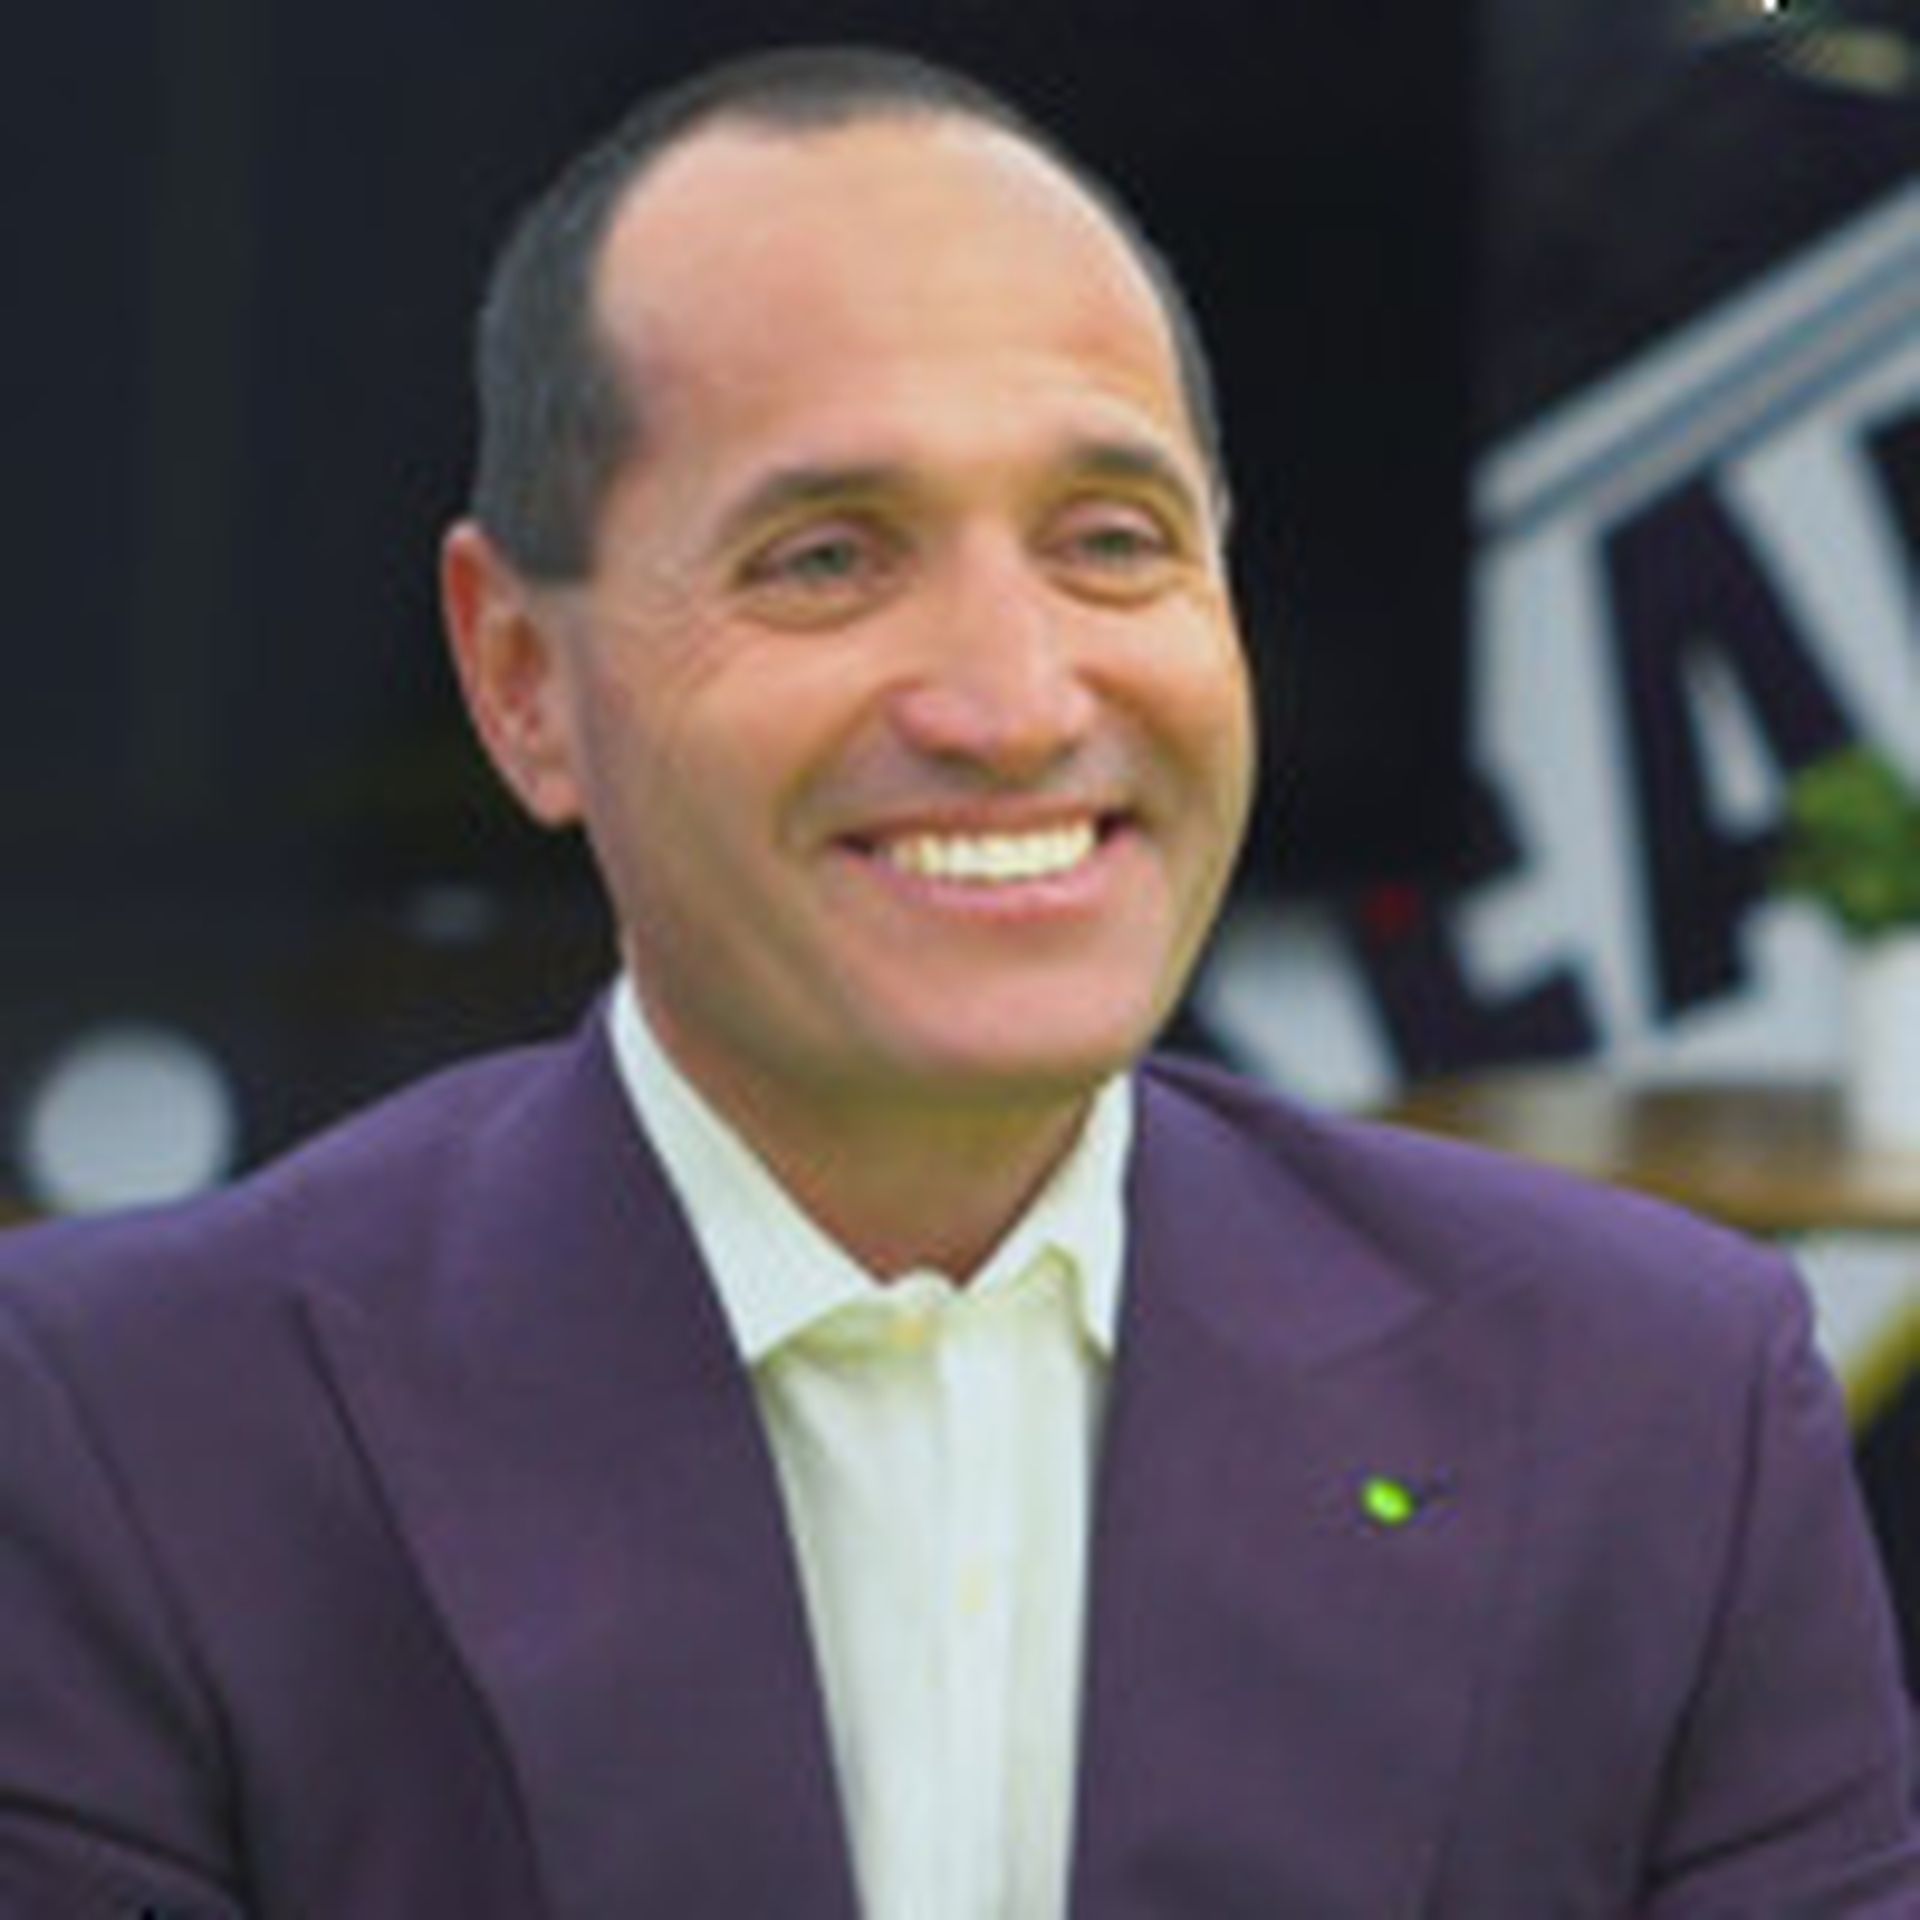 Anthony Viel, CEO, Deloitte Canada